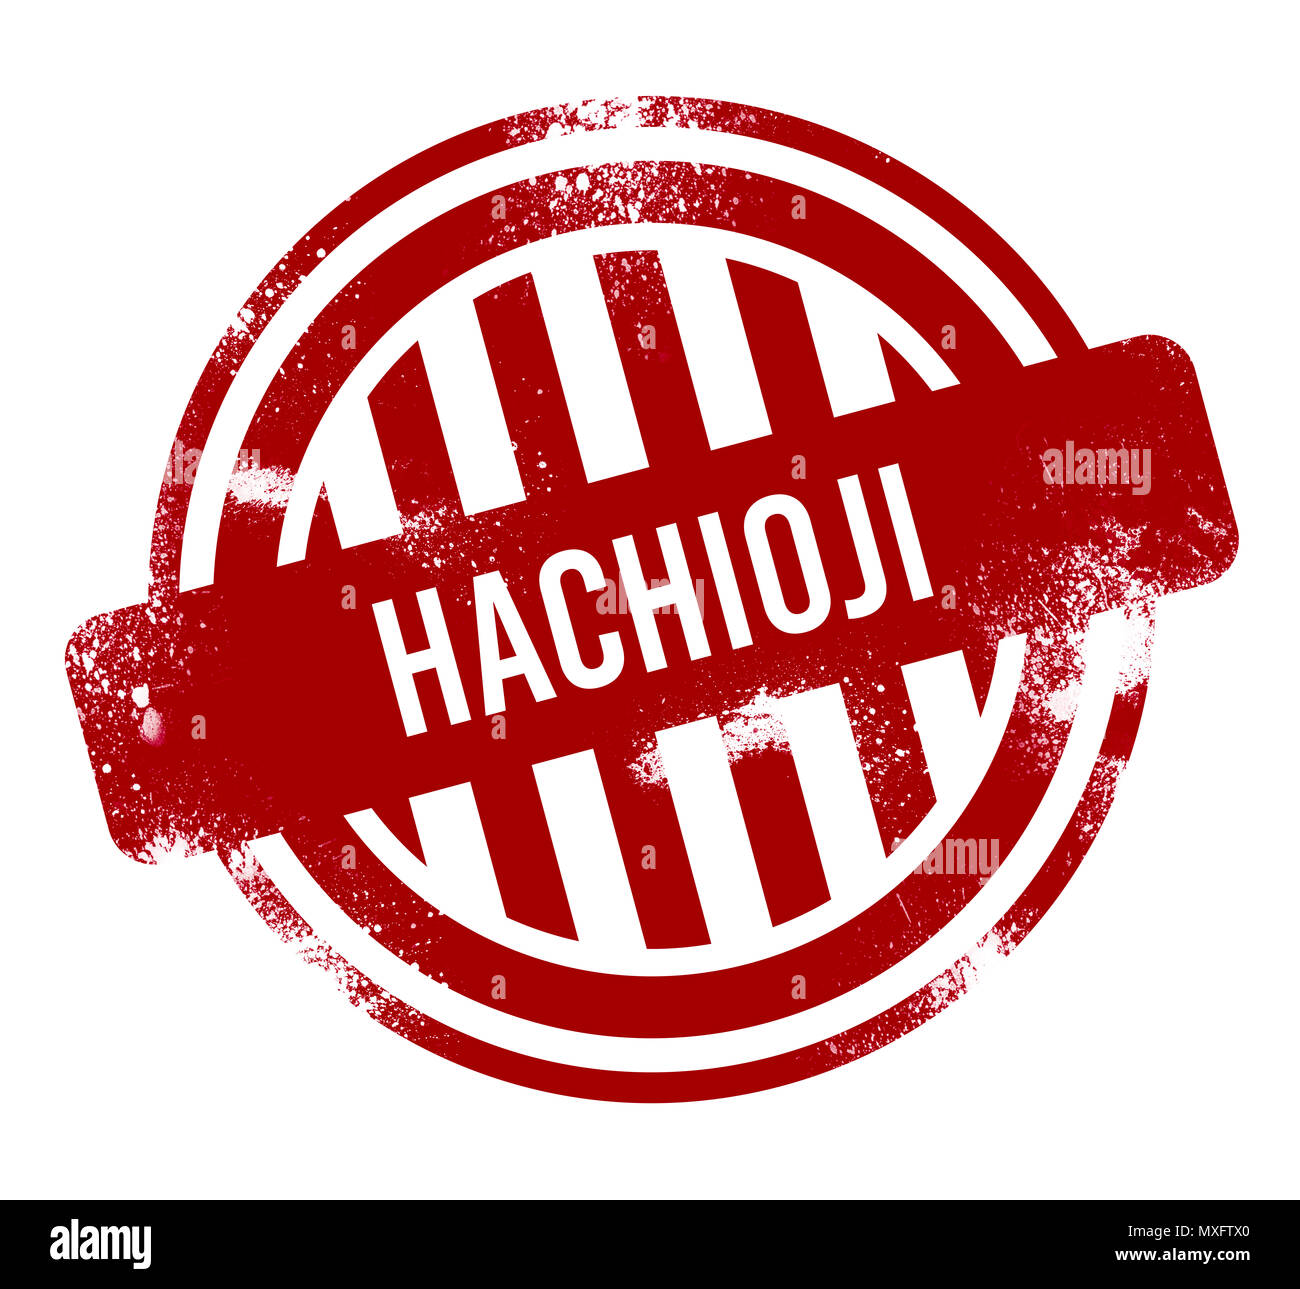 Hachioji - Red grunge button, stamp Stock Photo